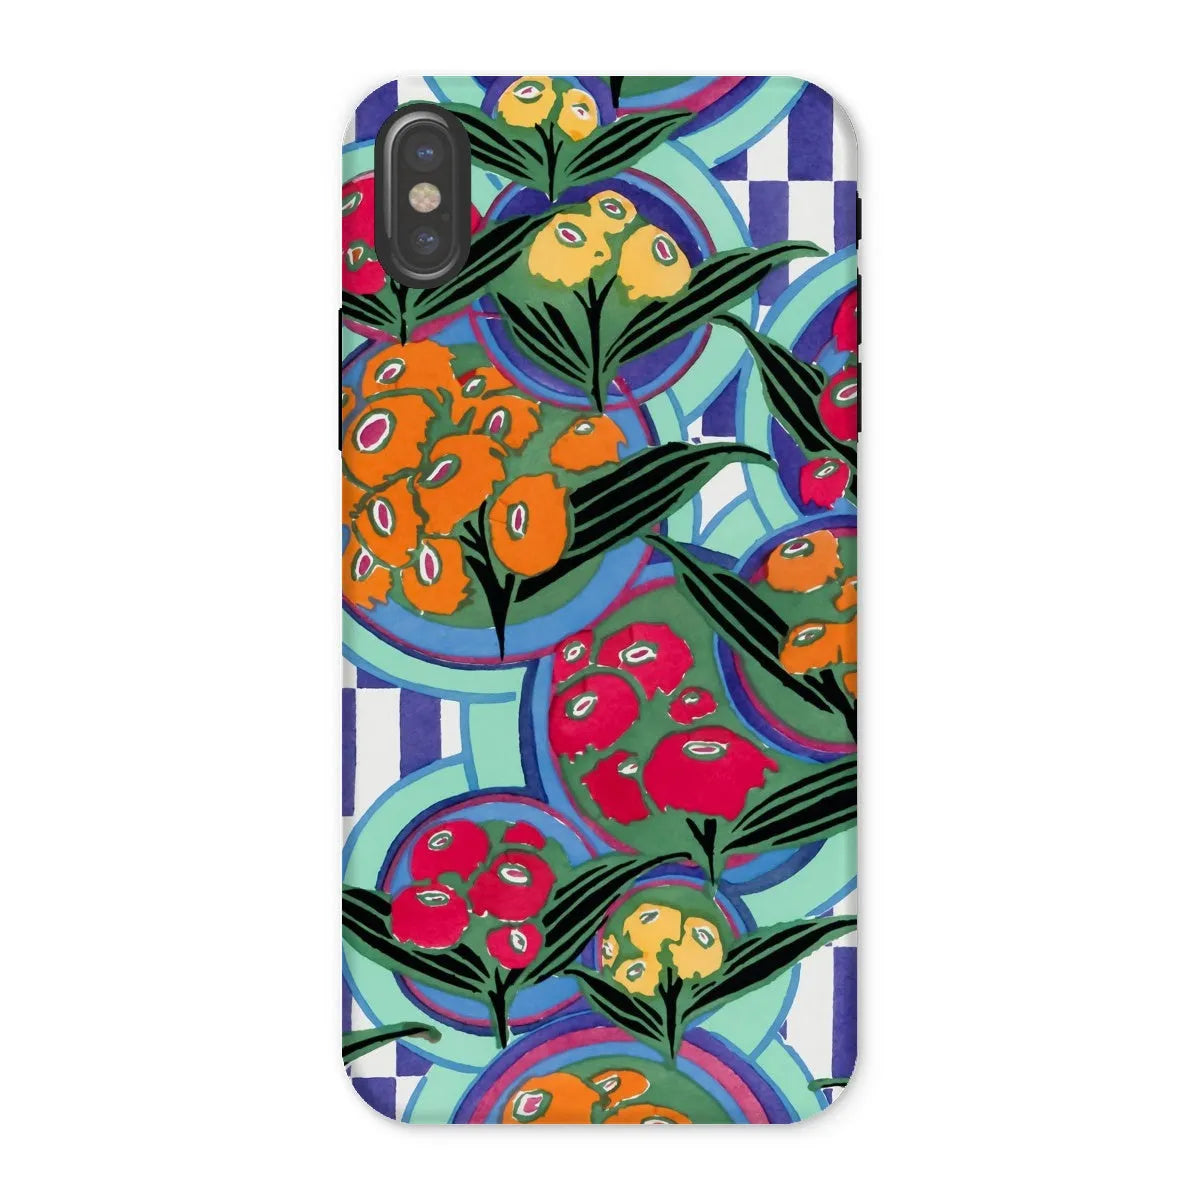 Vibrant Floral Aesthetic Art Phone Case - E.a. Séguy - Iphone x / Matte - Mobile Phone Cases - Aesthetic Art